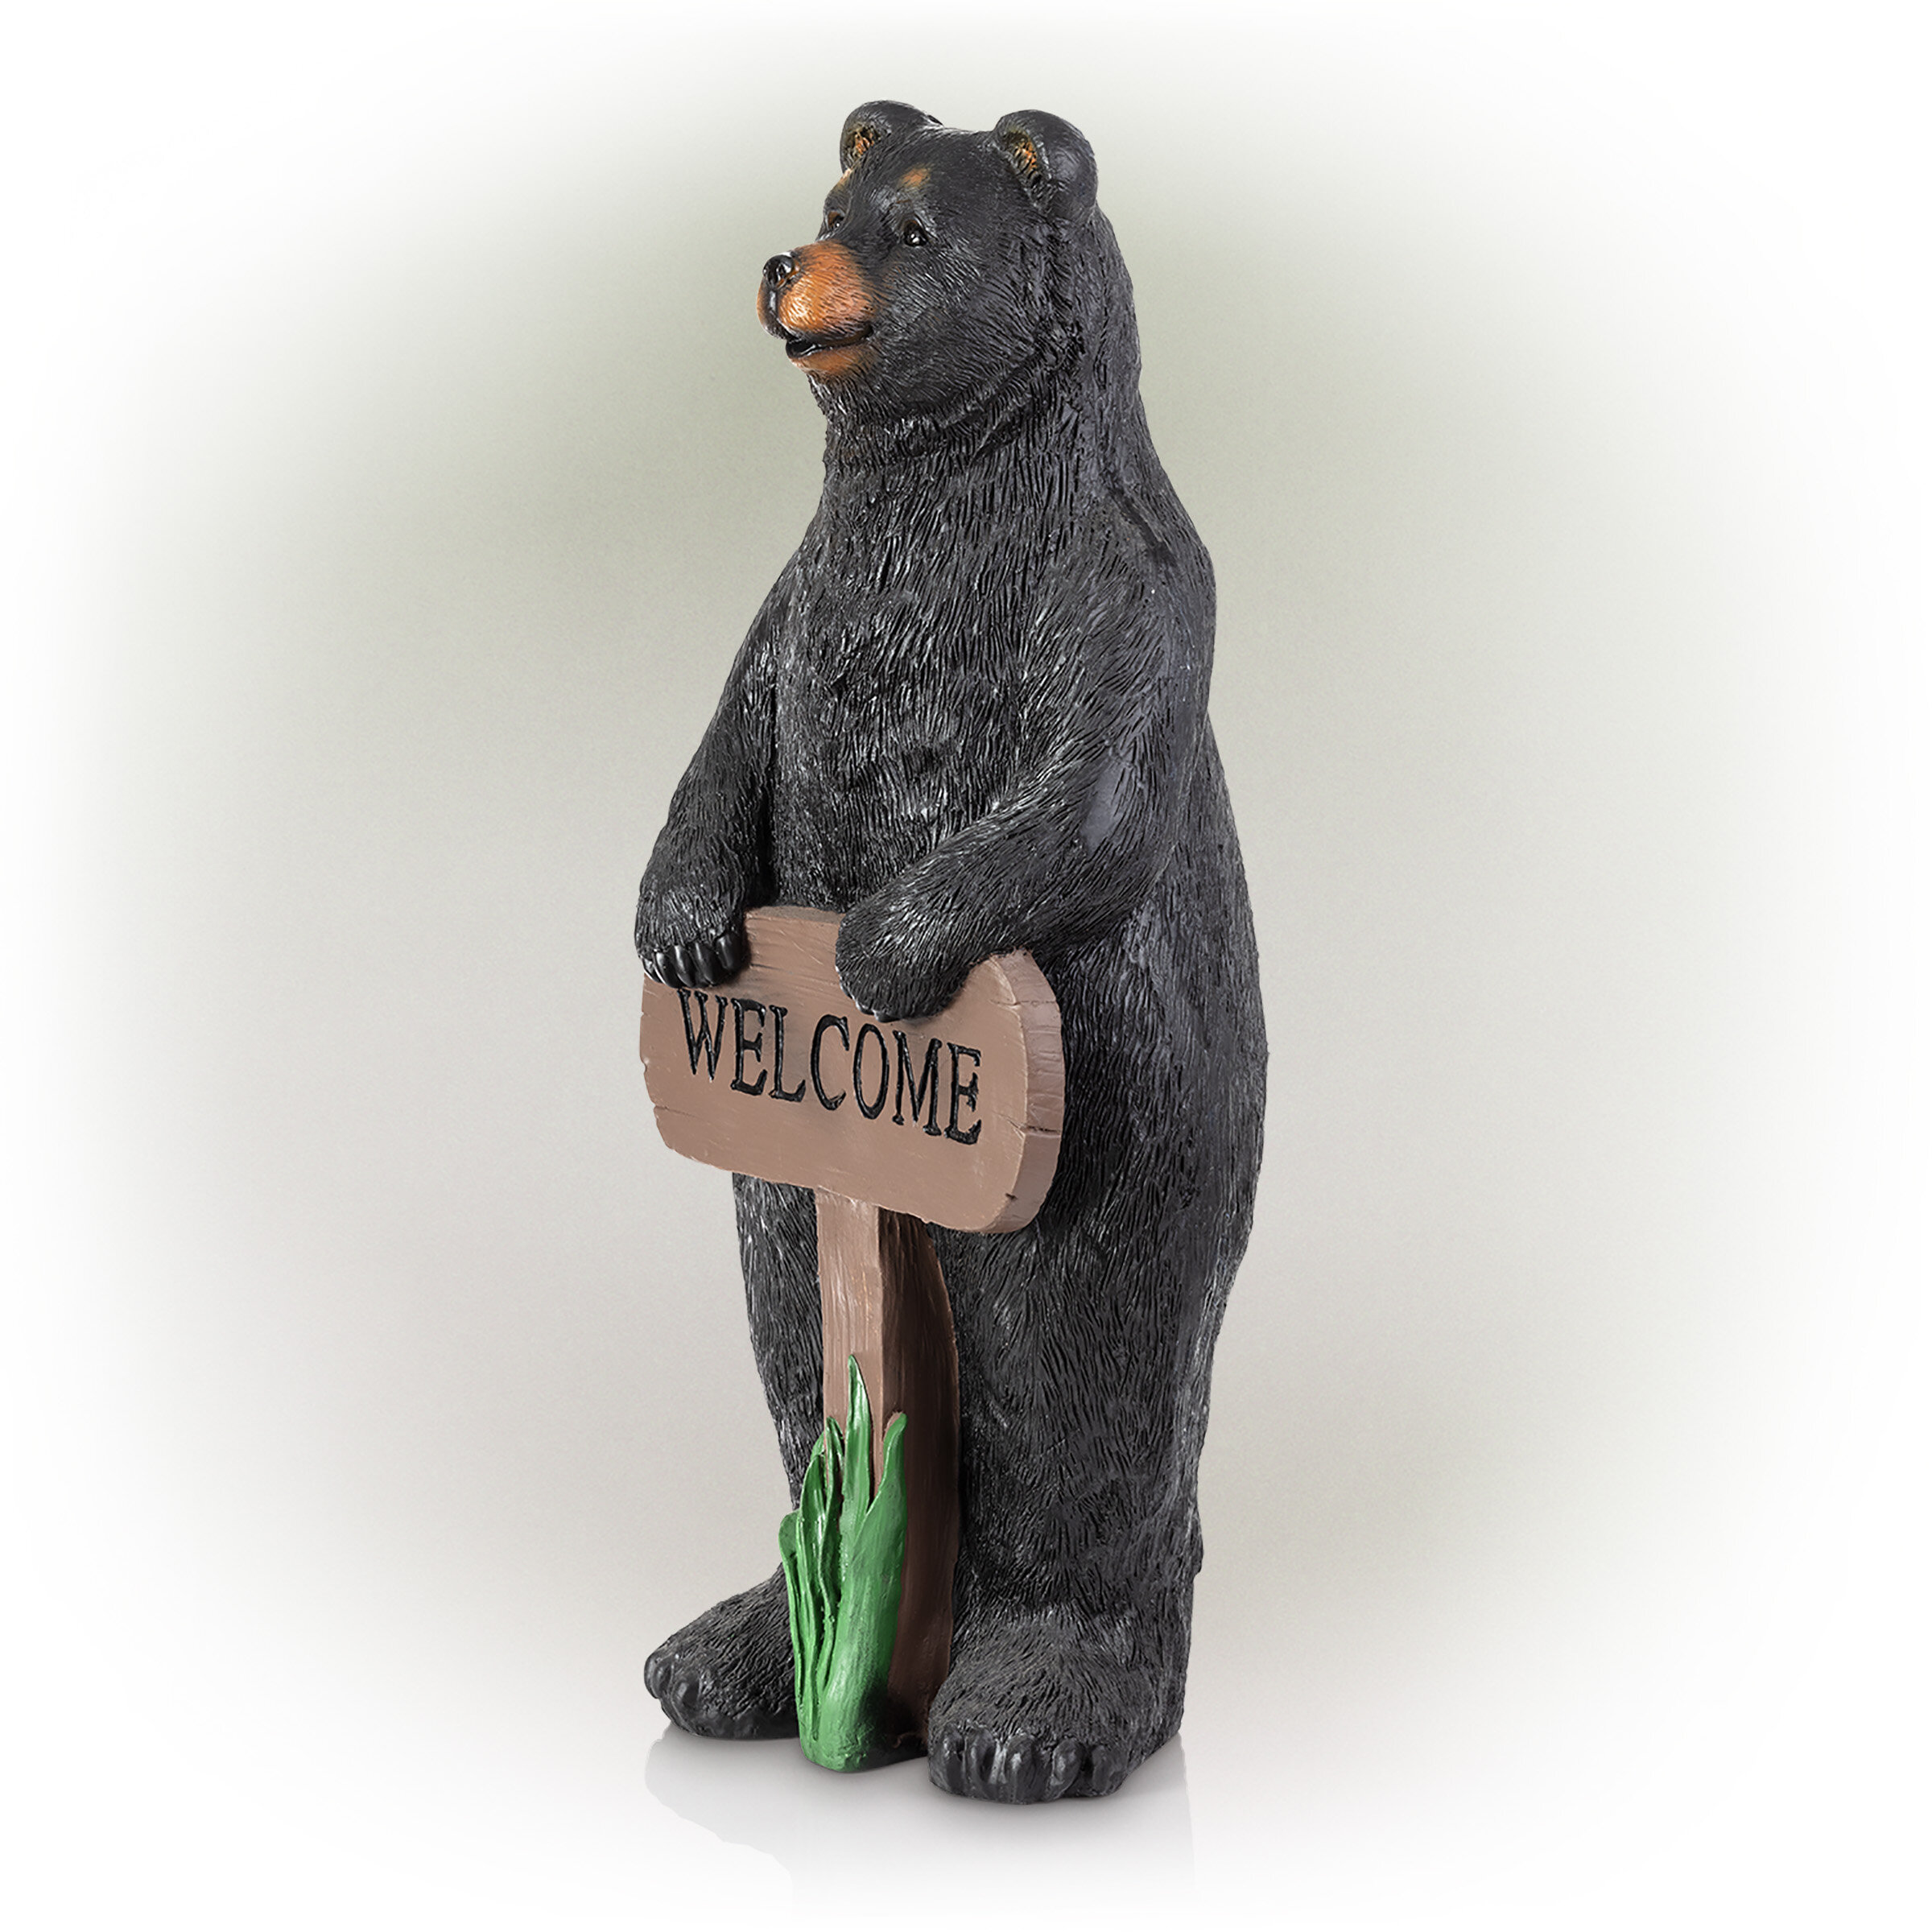 Millwood Pines Millican Bear Animals Plastic Garden Statue